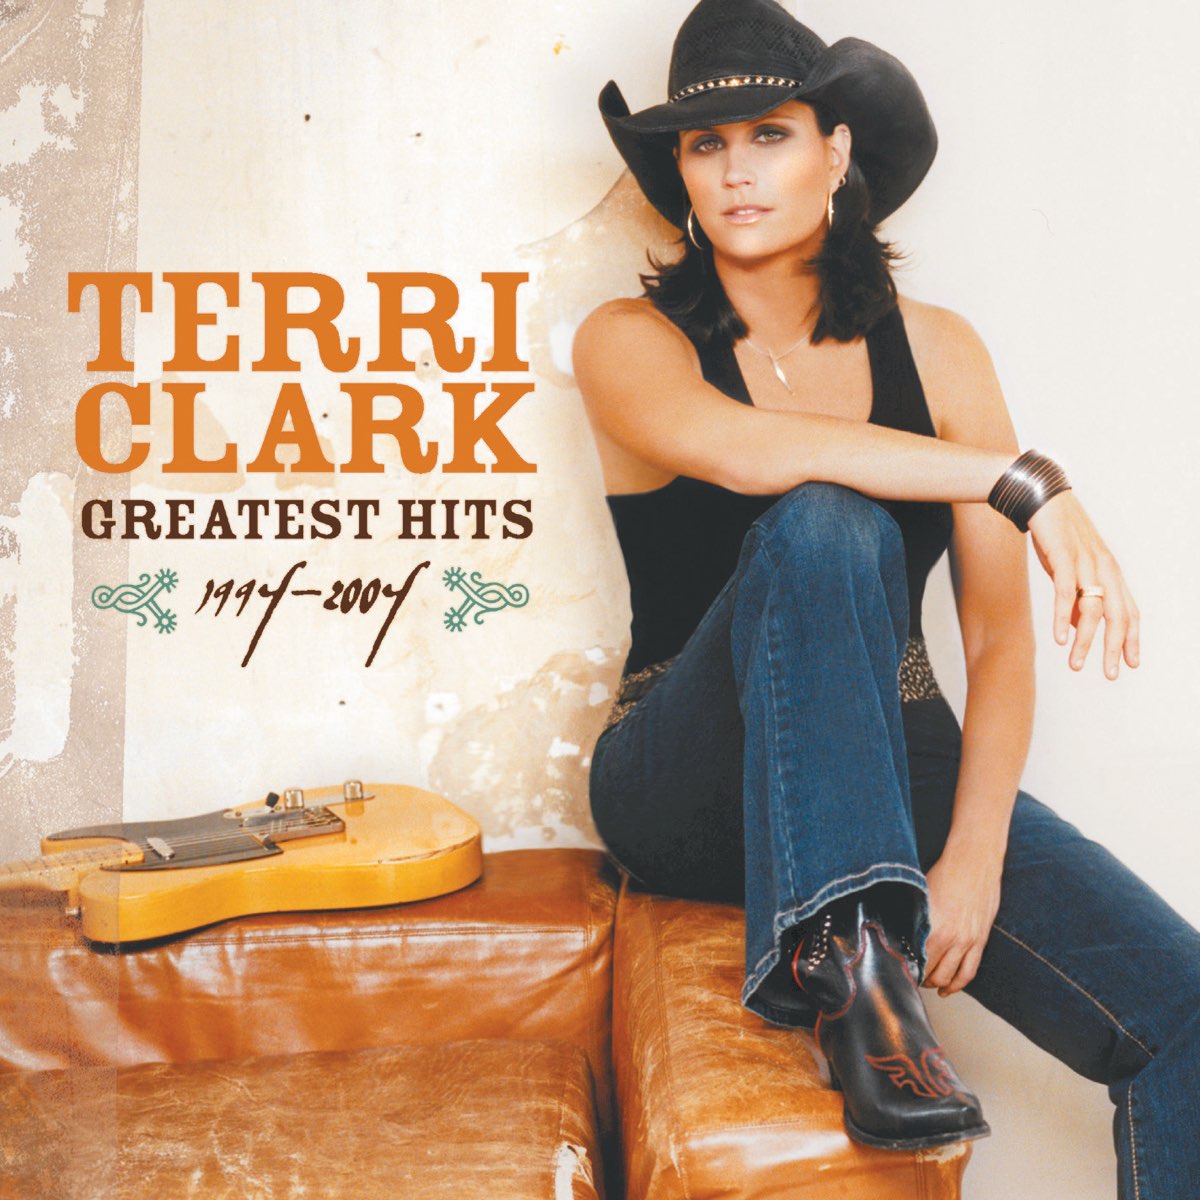 ‎terri Clark Greatest Hits By Terri Clark On Apple Music